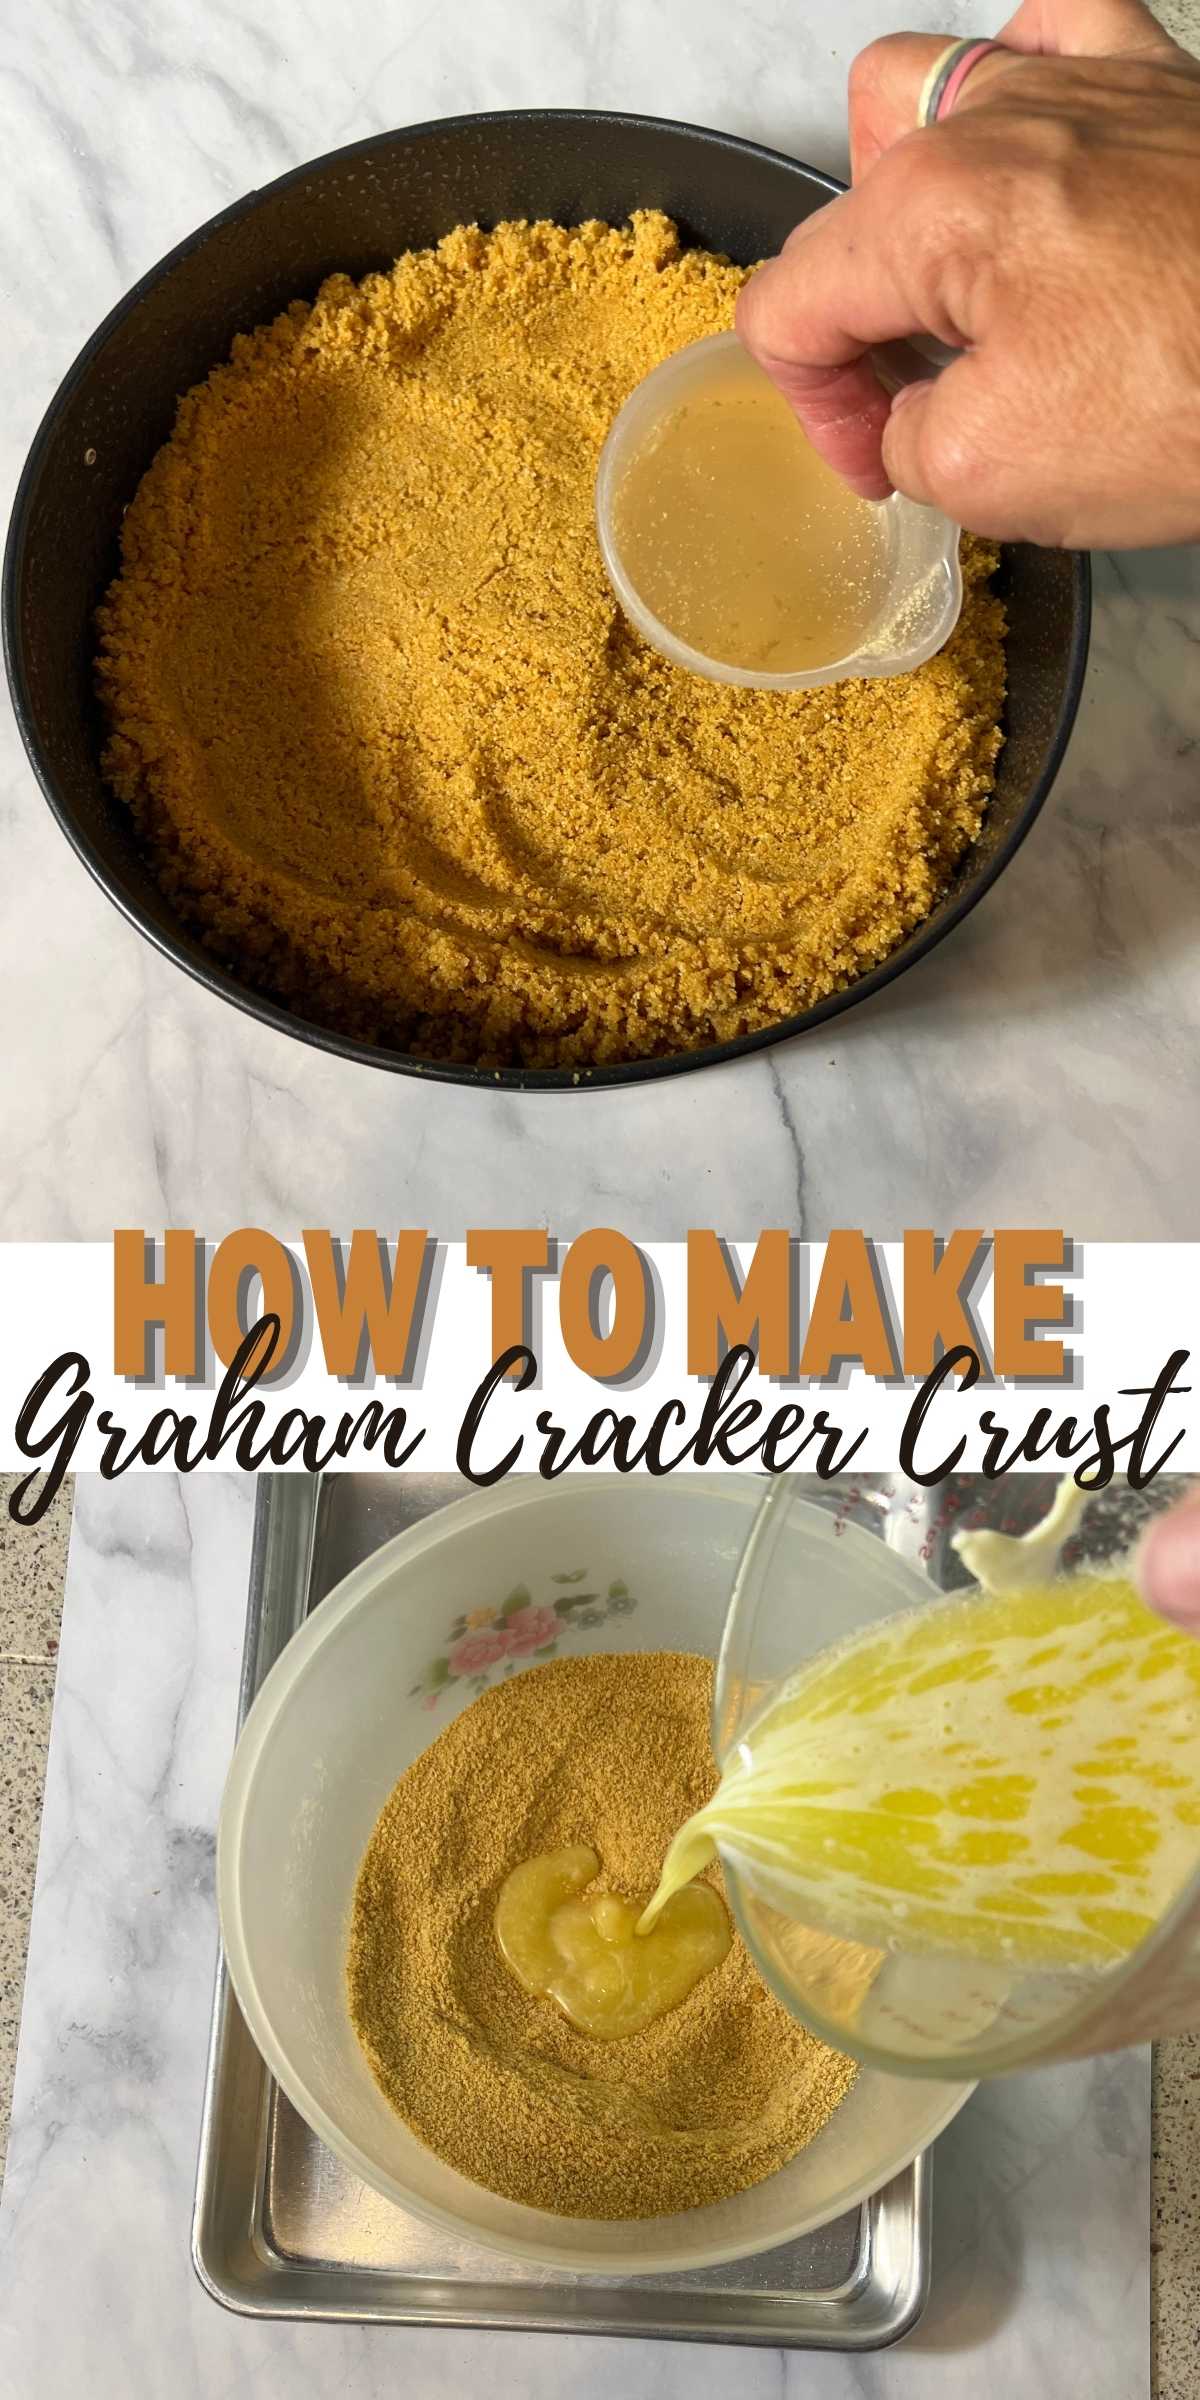 HOW TO MAKE A GRAHAM CRACKER CRUST RECIPE